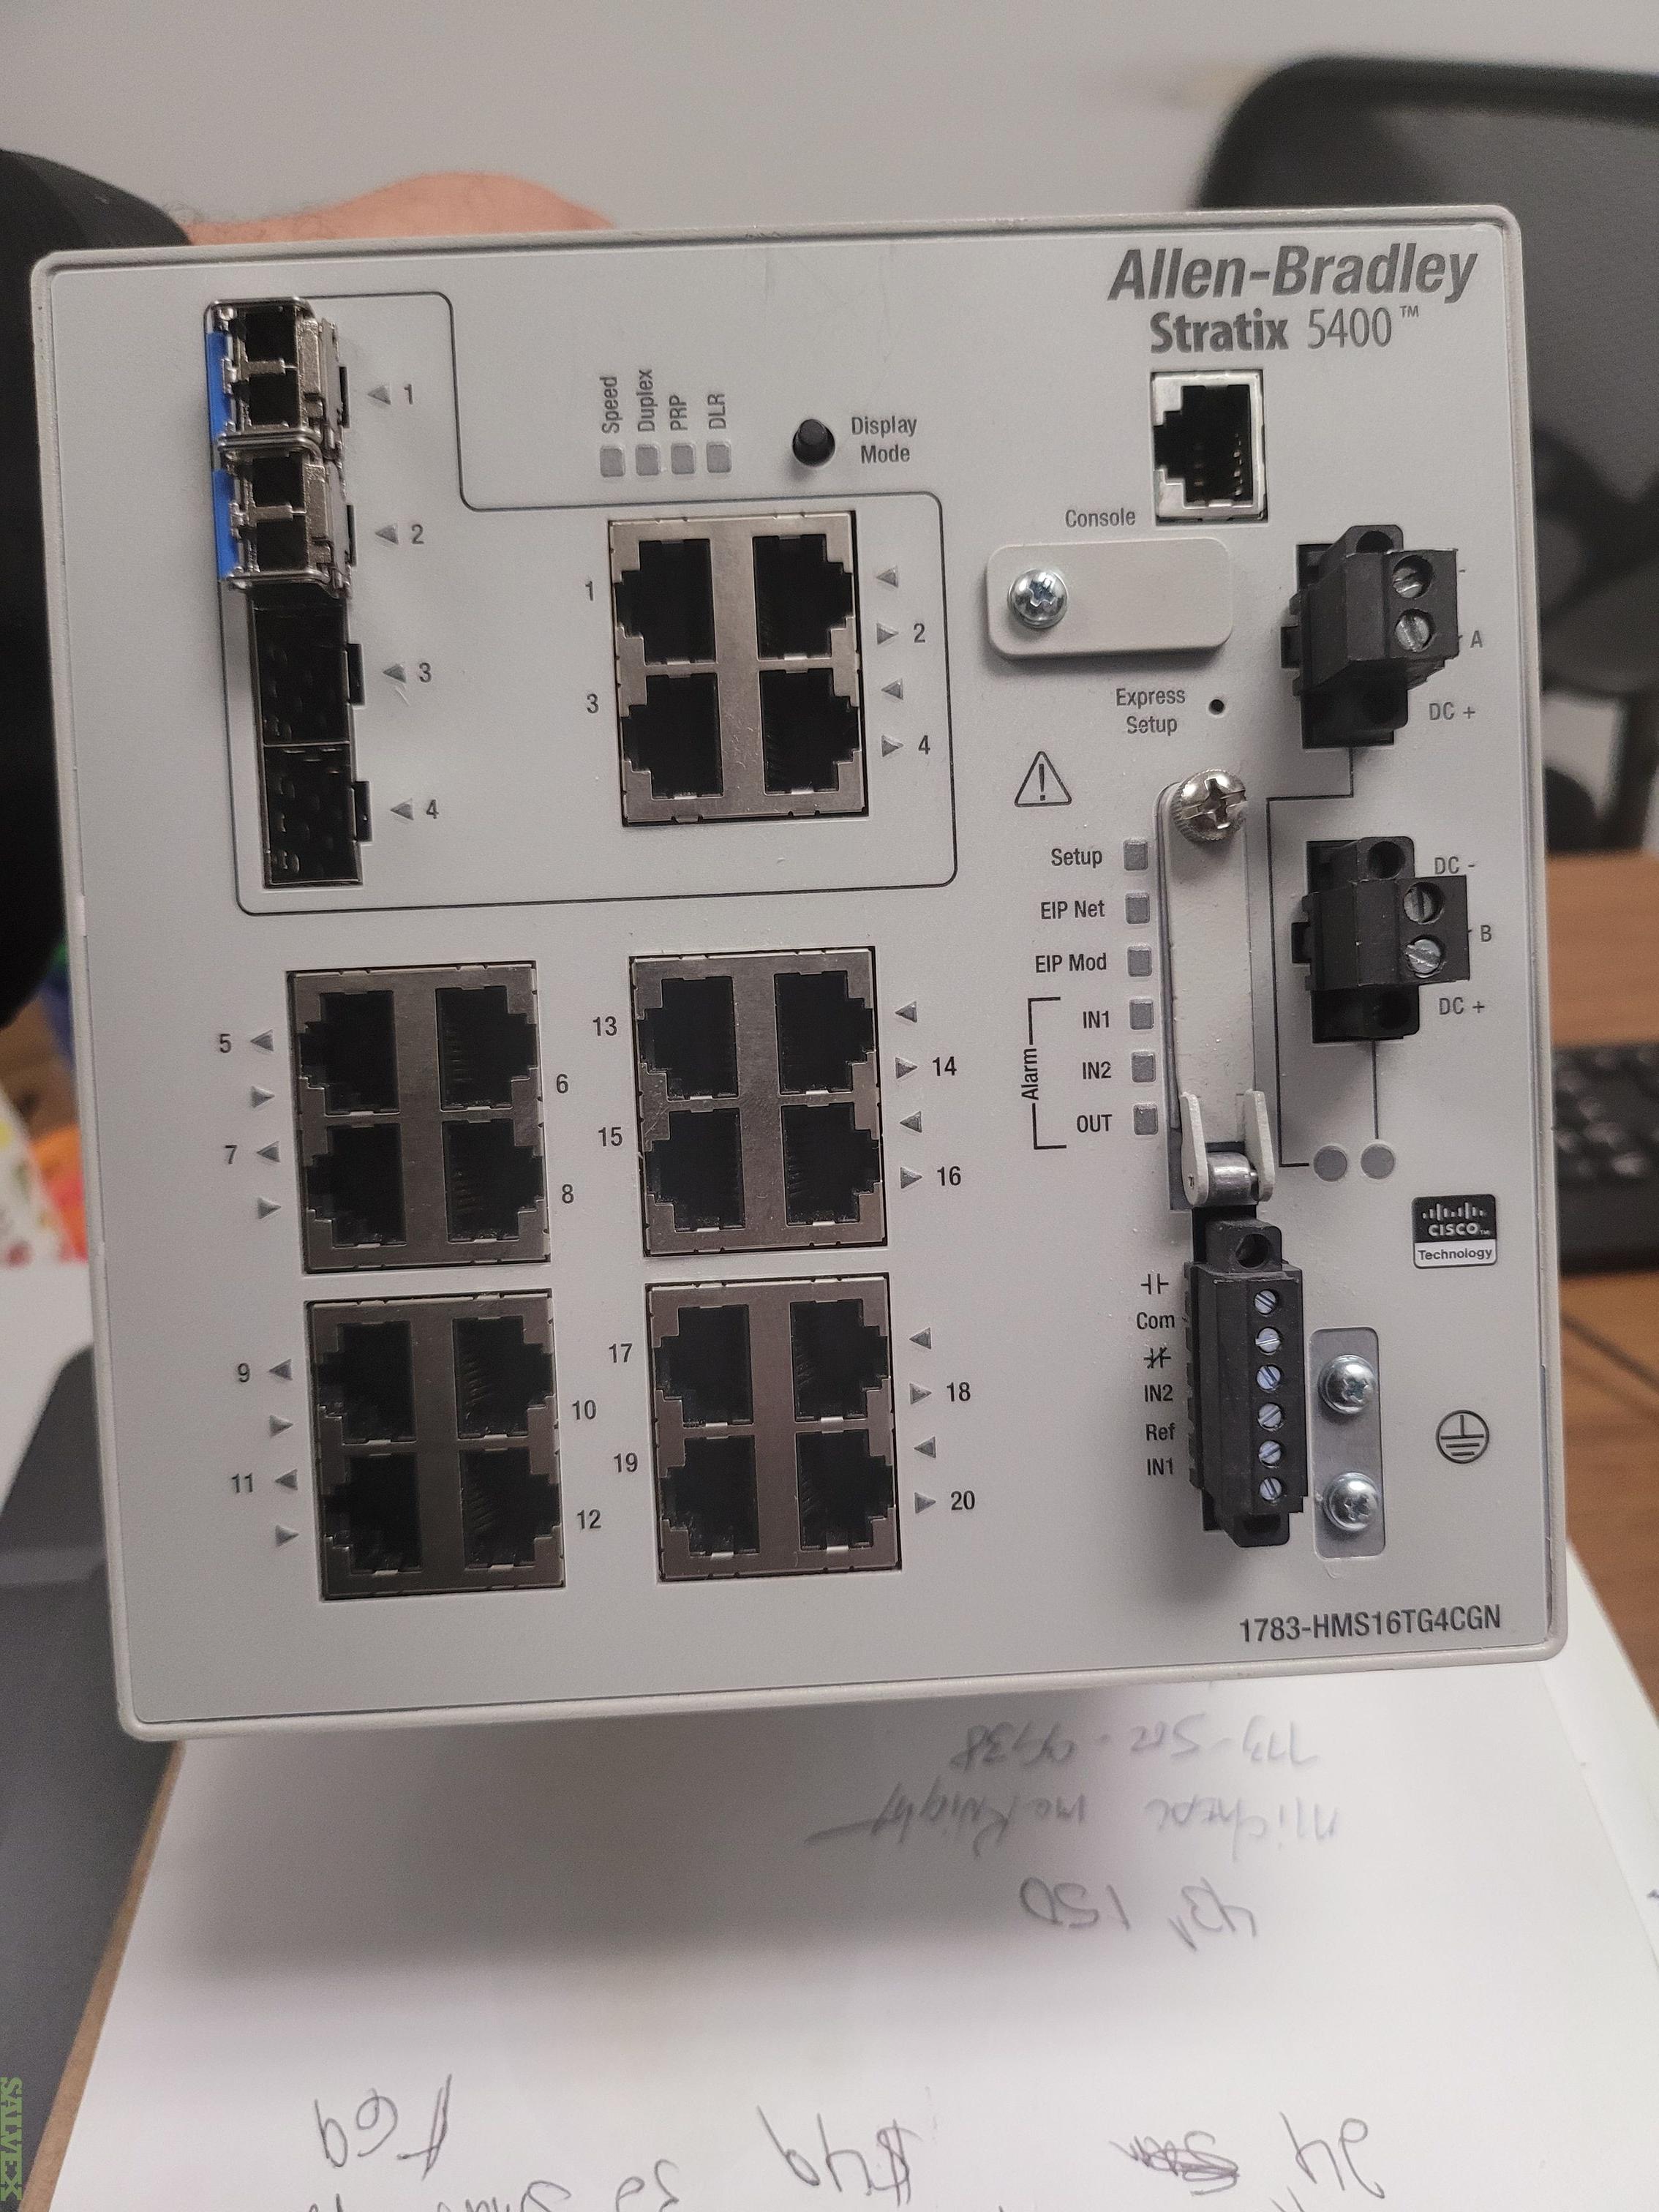 Allen-Bradley Stratix 5400 (Industrial Ethernet Managed Switch) / 6 Units